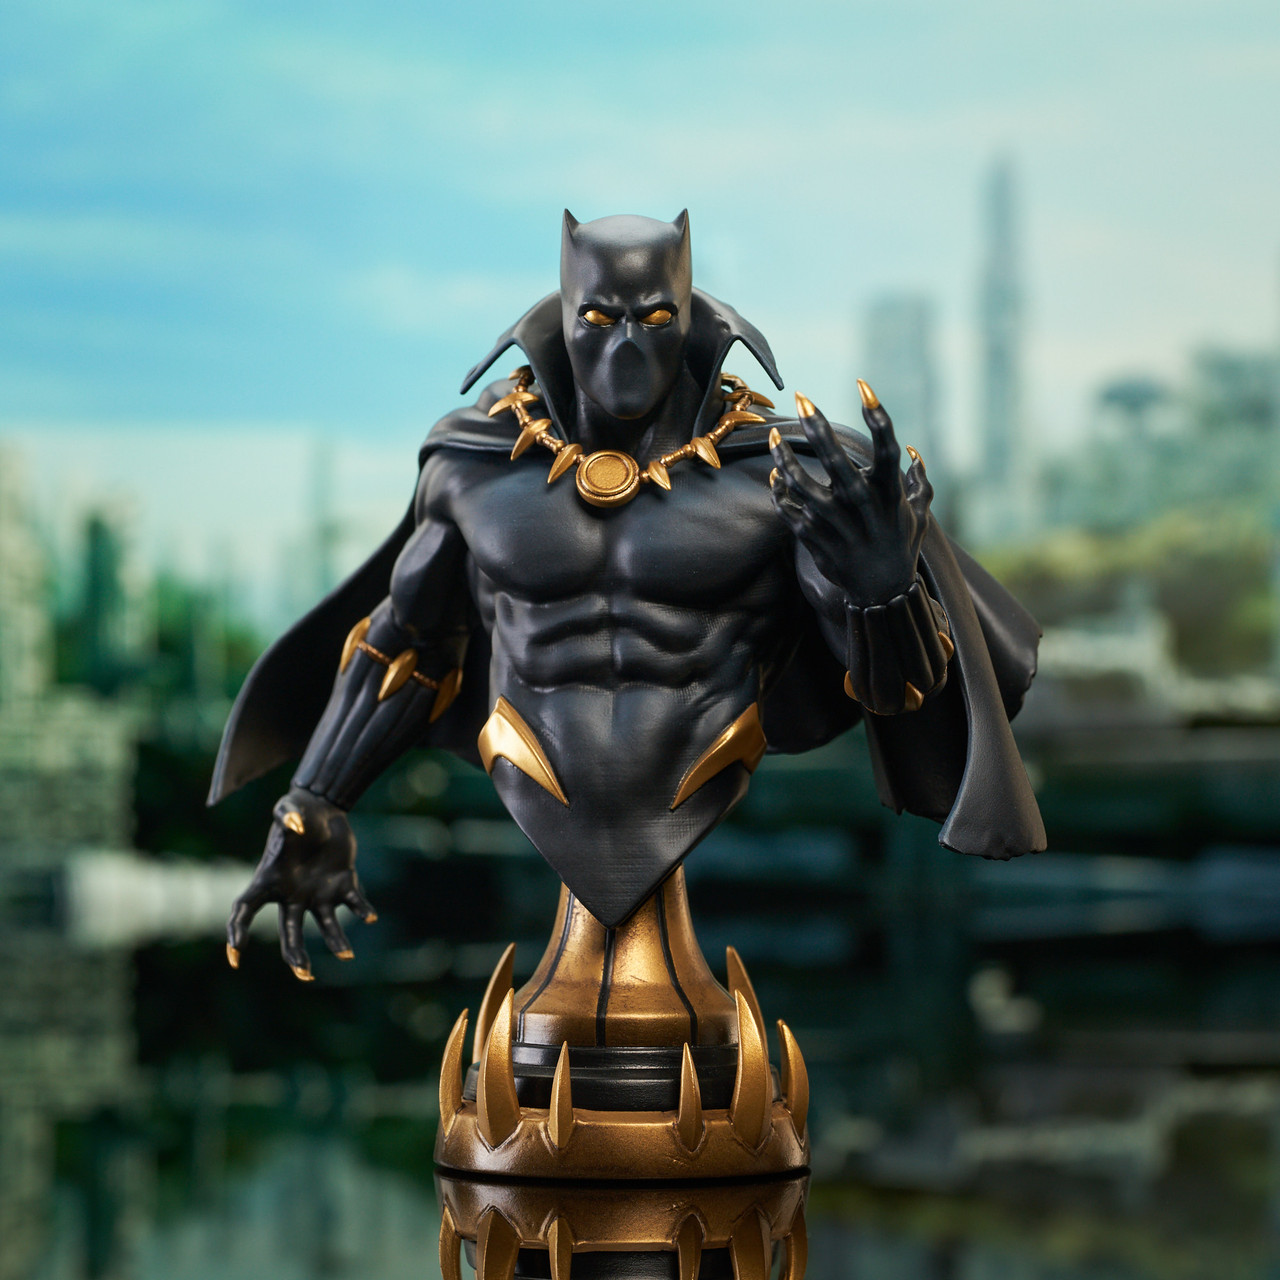 Pre-Order Diamond Marvel Black Panther Bust